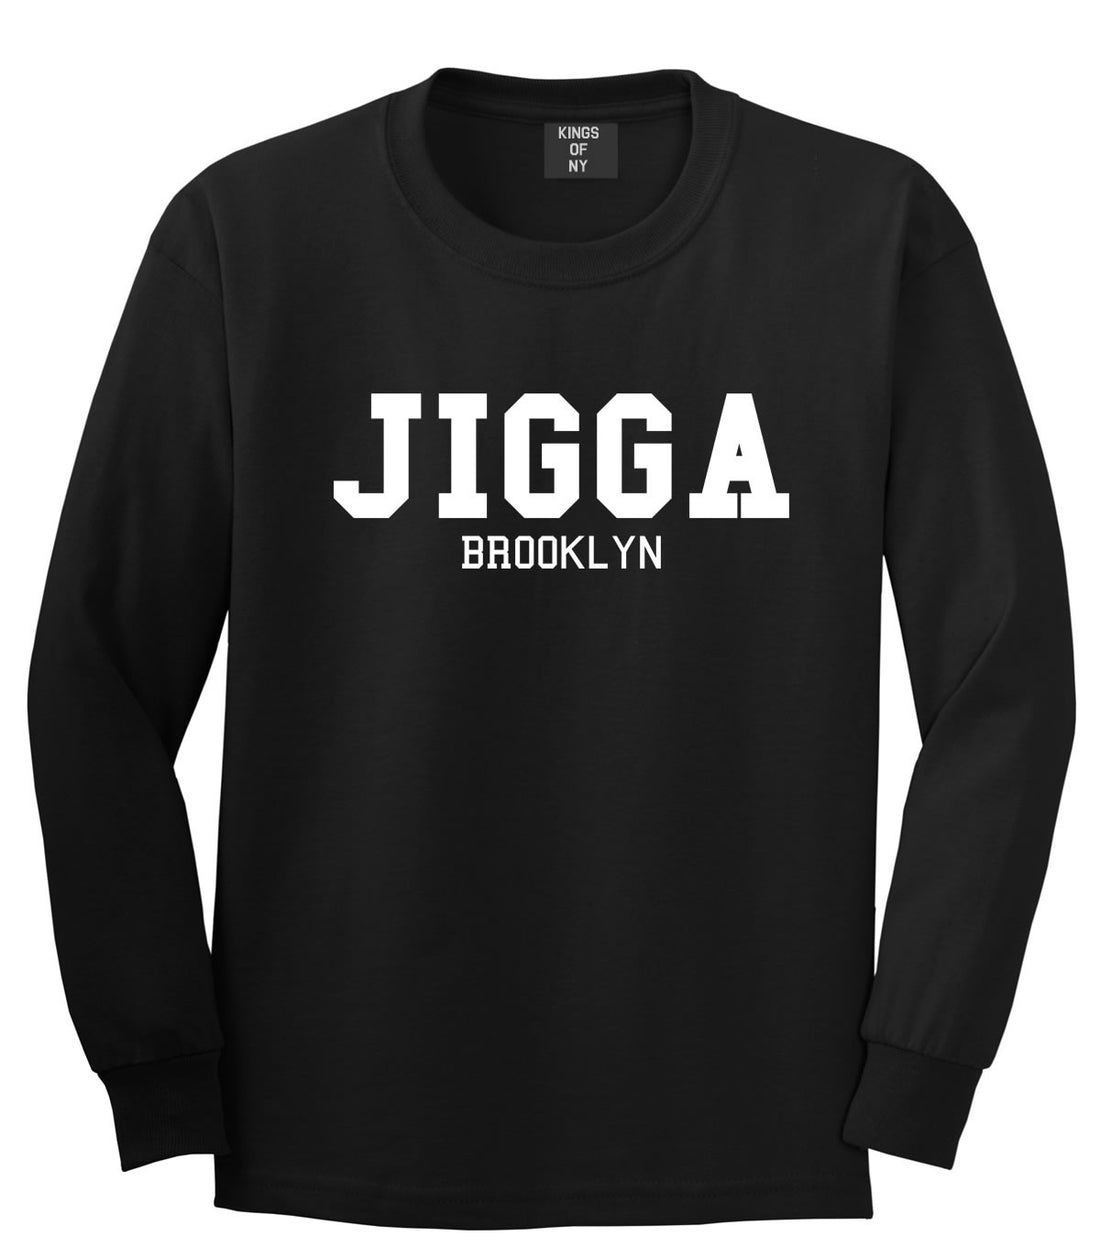 Jigga Brooklyn Long Sleeve T-Shirt in Black by Kings Of NY